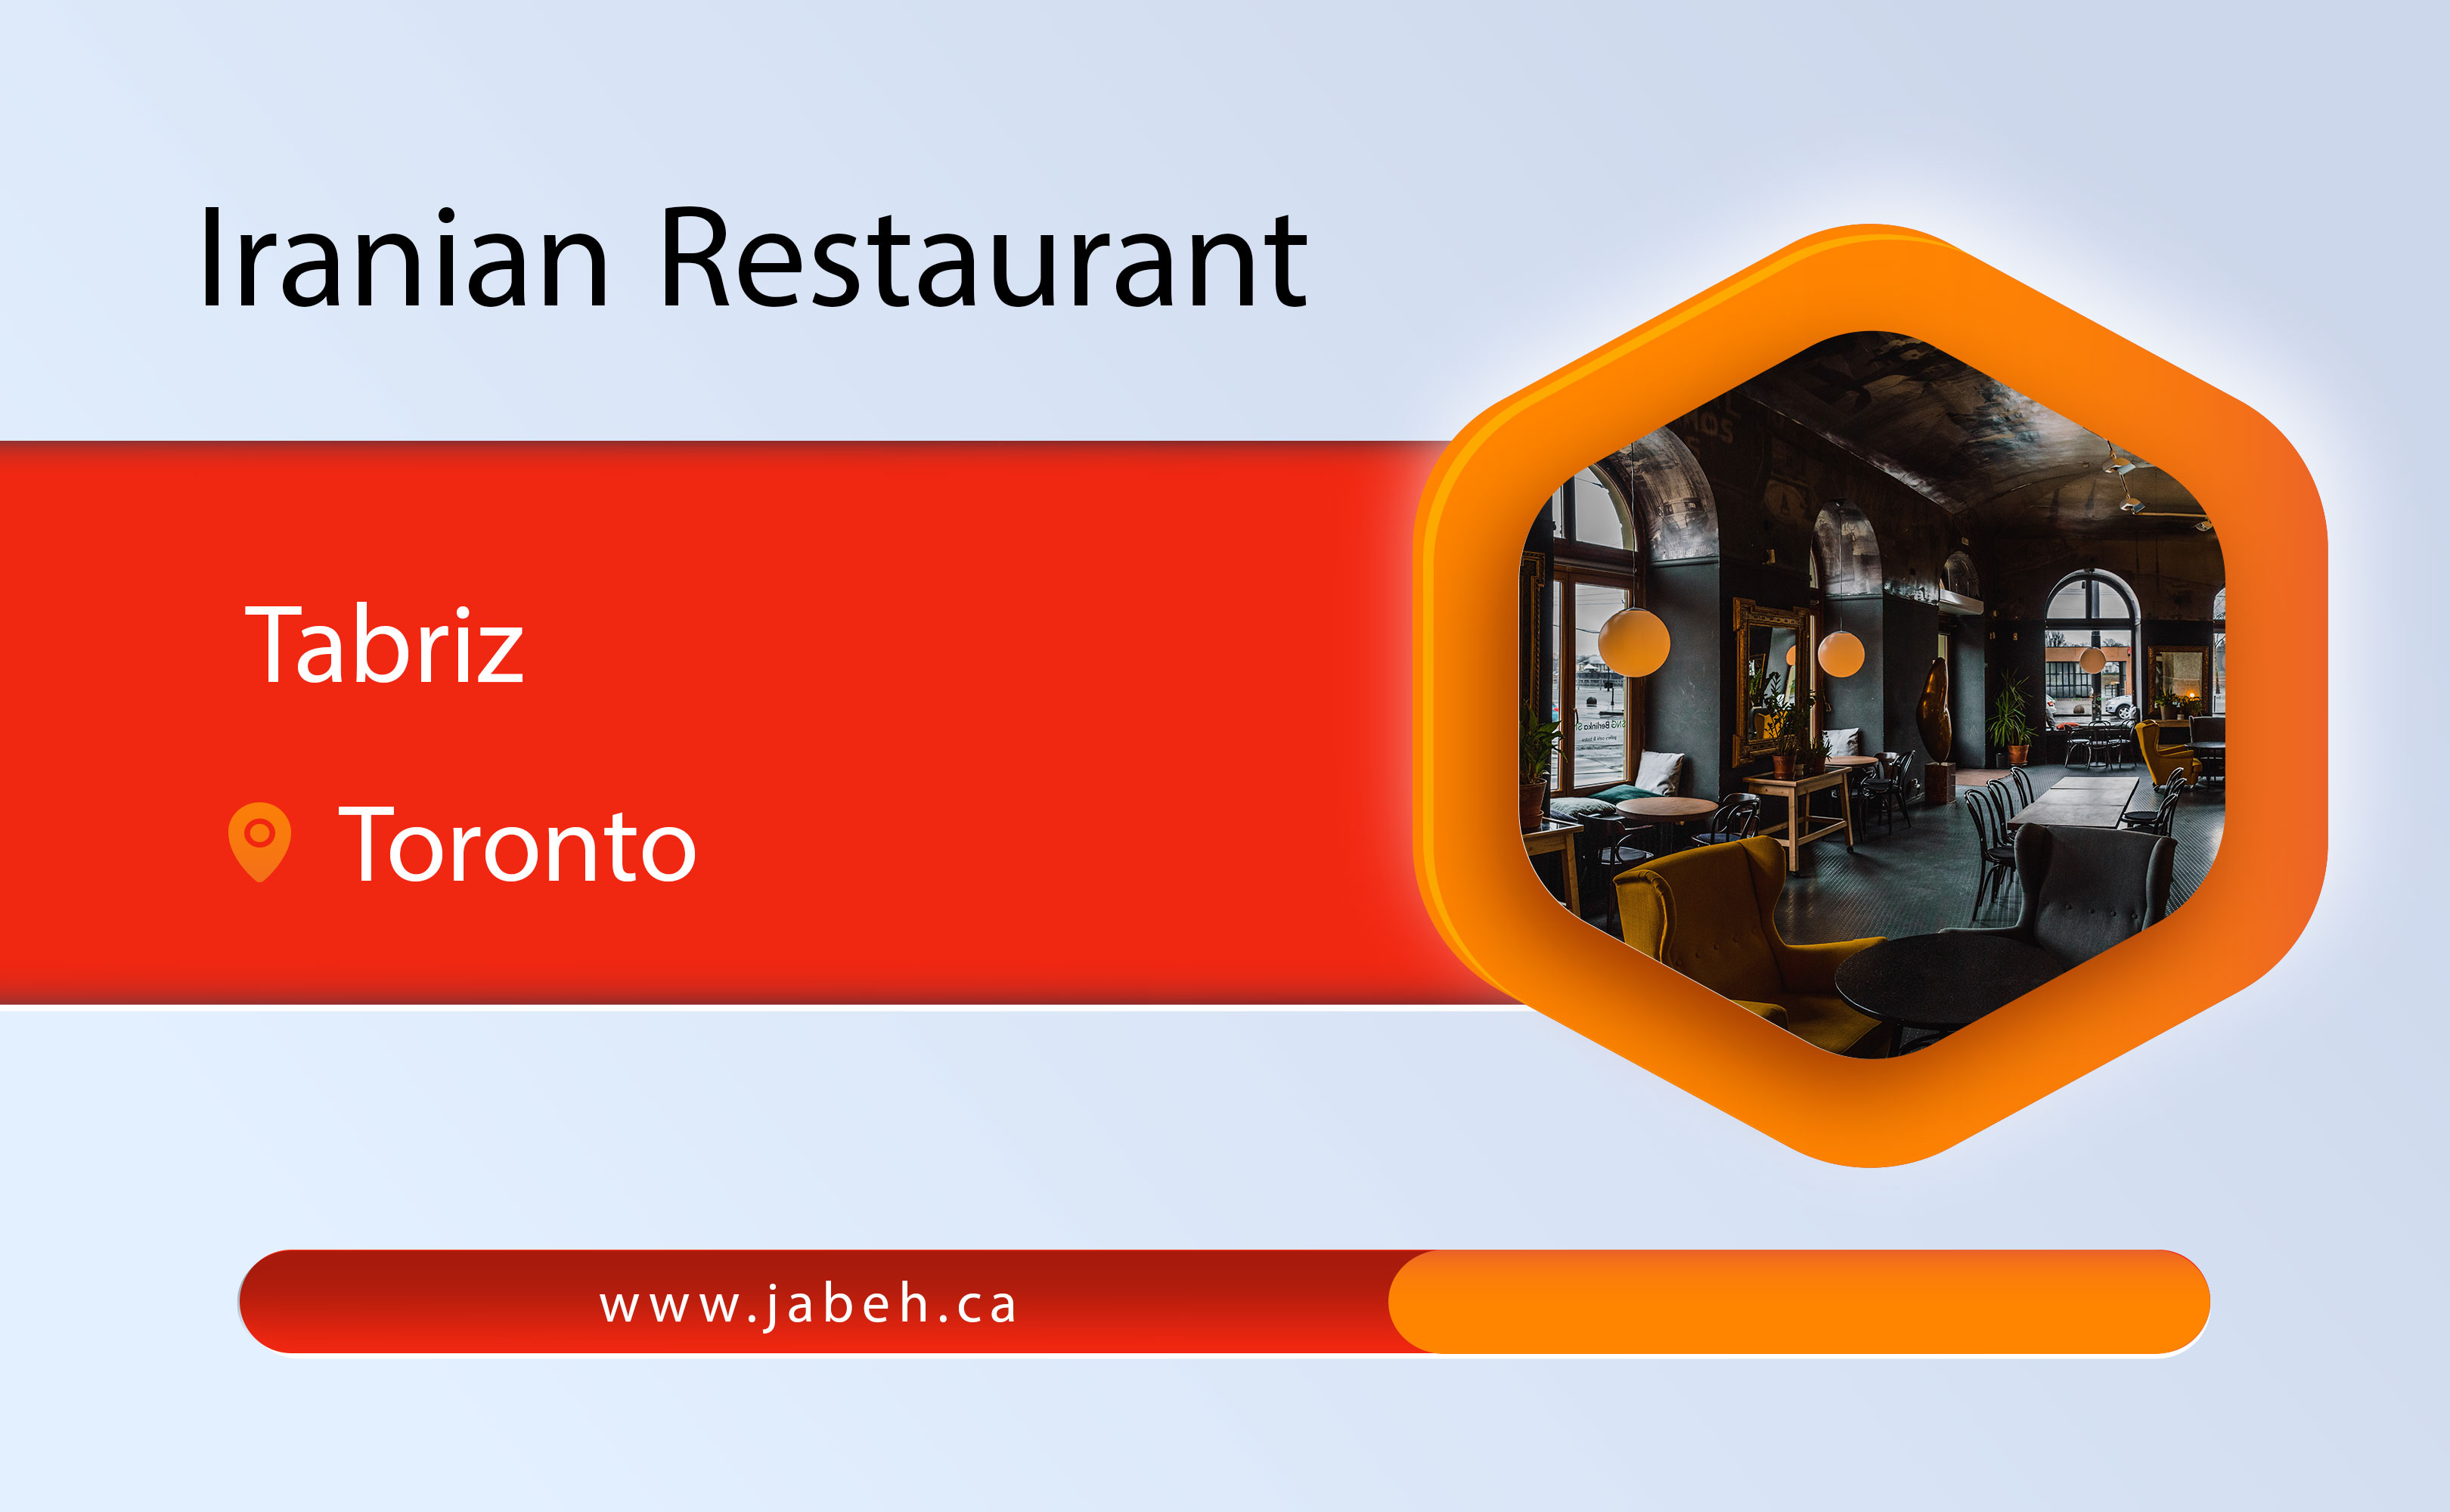 Tabriz Iranian restaurant in Toronto